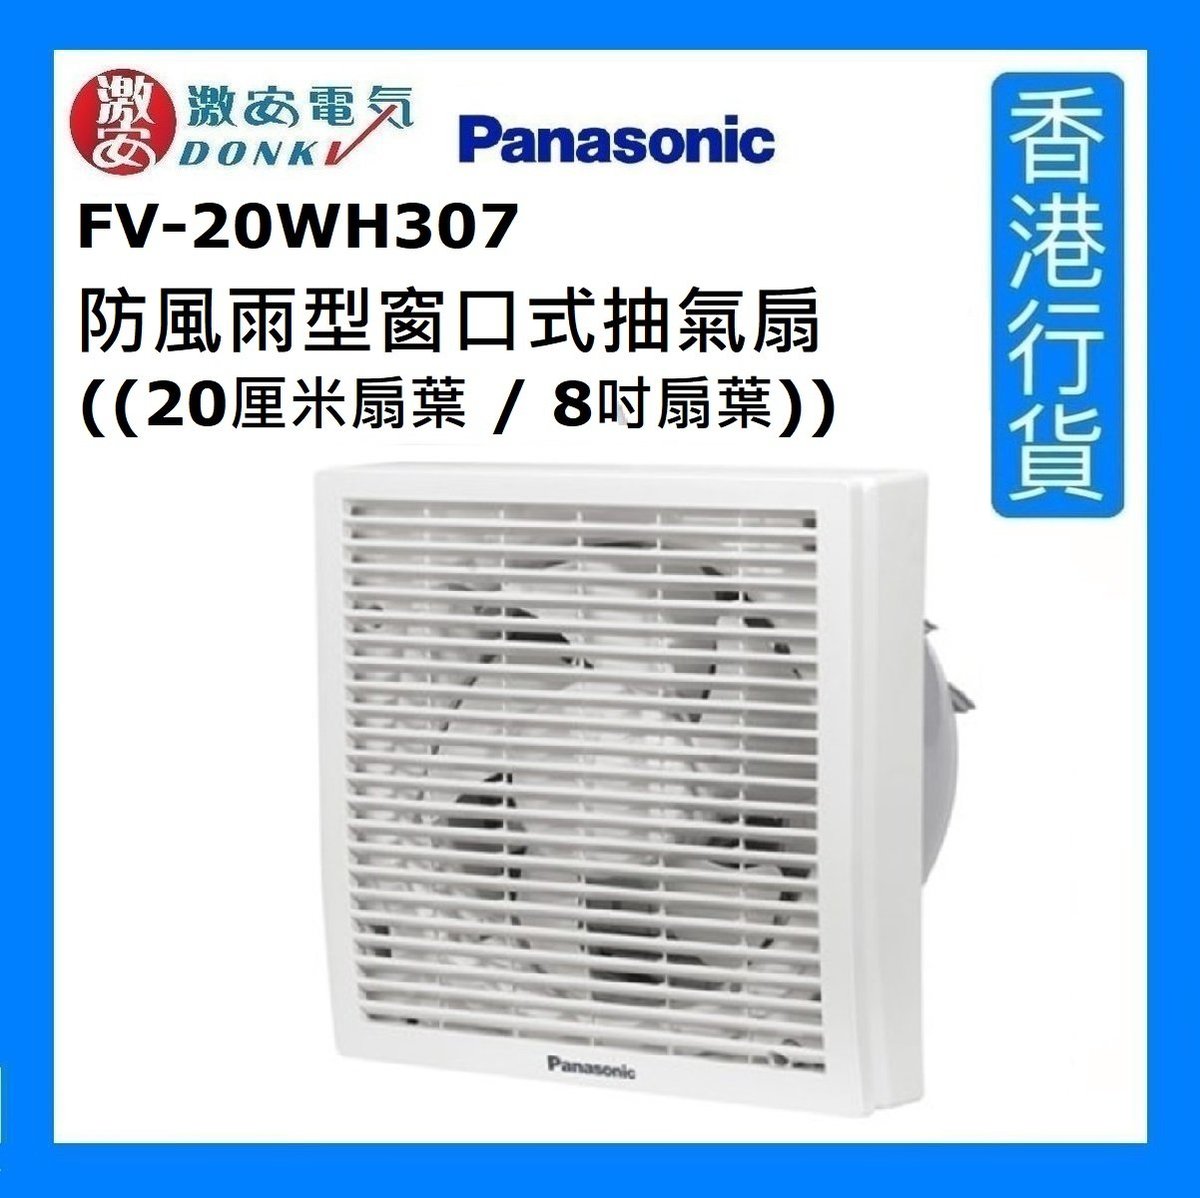 FV-20WH307 8" 防風雨型窗口式抽氣扇 ((20厘米扇葉 / 8吋扇葉)) [香港行貨]